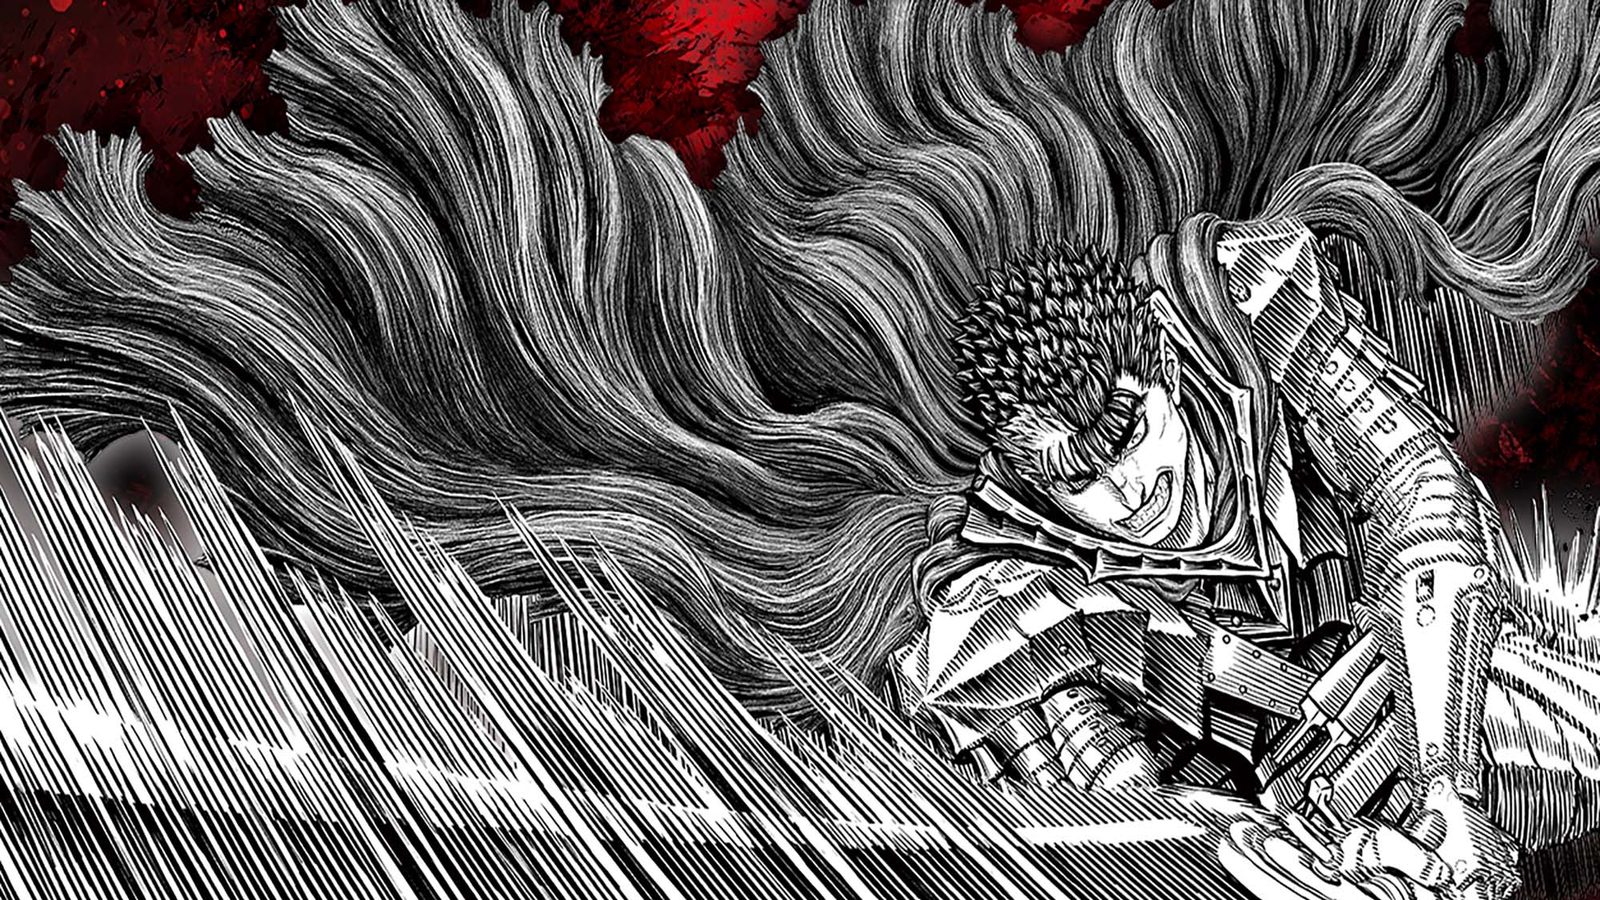 Berserk' Manga Will Continue On Following Kentaro Miura's Death